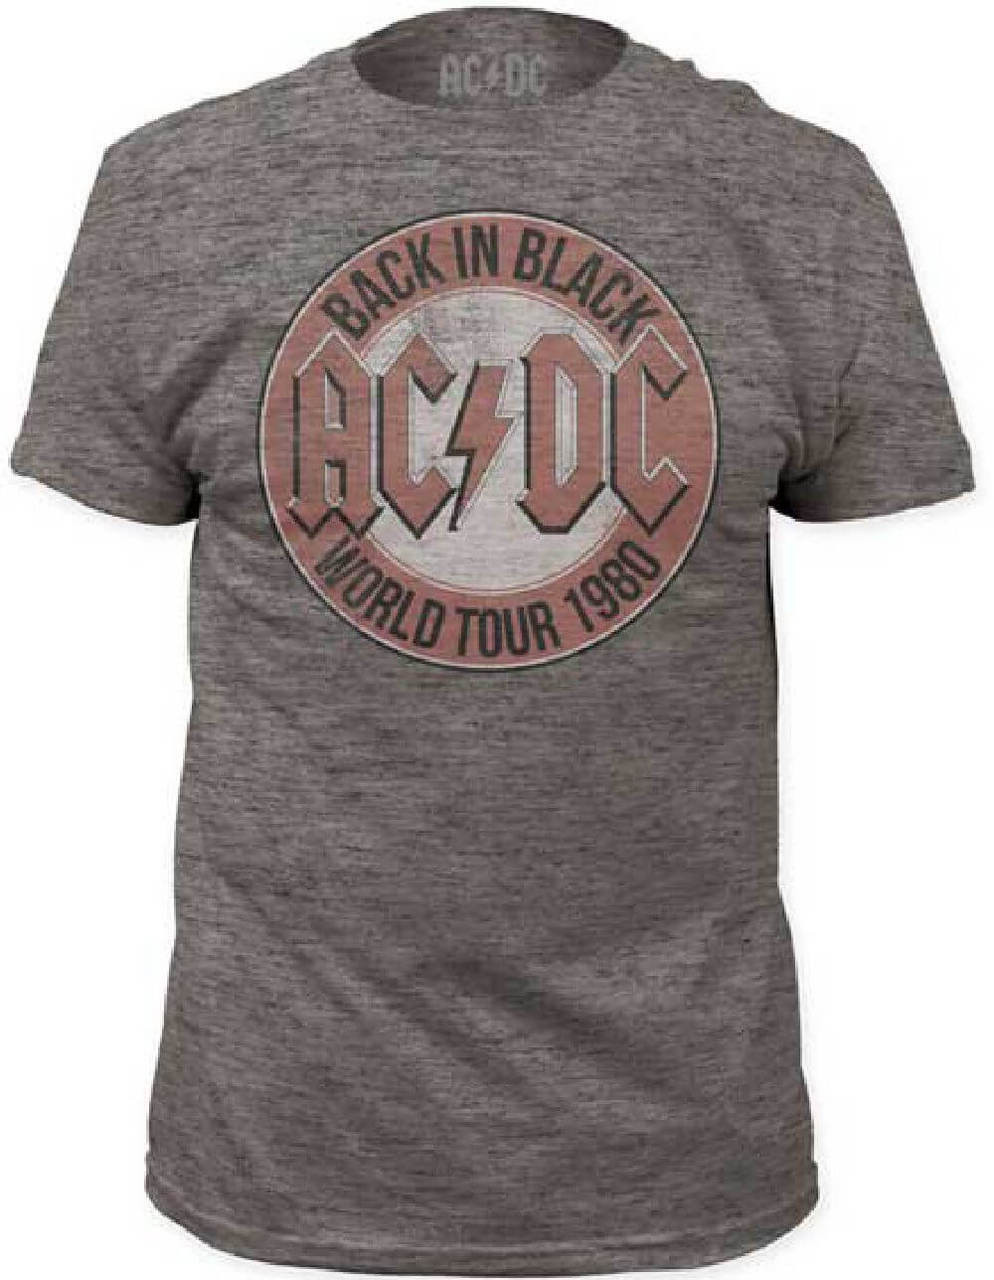 Acdc Back In Black World Tour 1980 Mens Gray Vintage Concert T Shirt